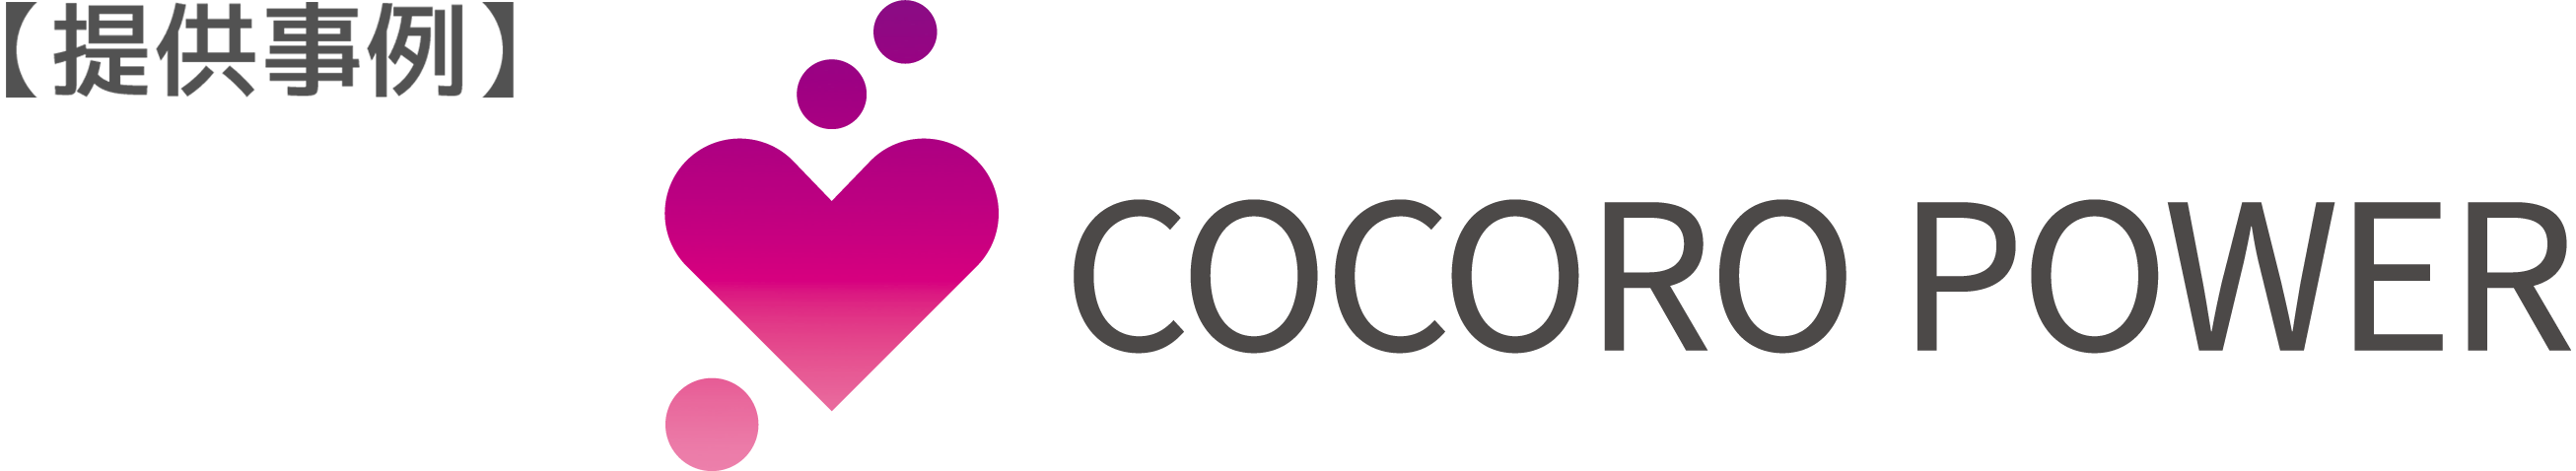 cocoropower